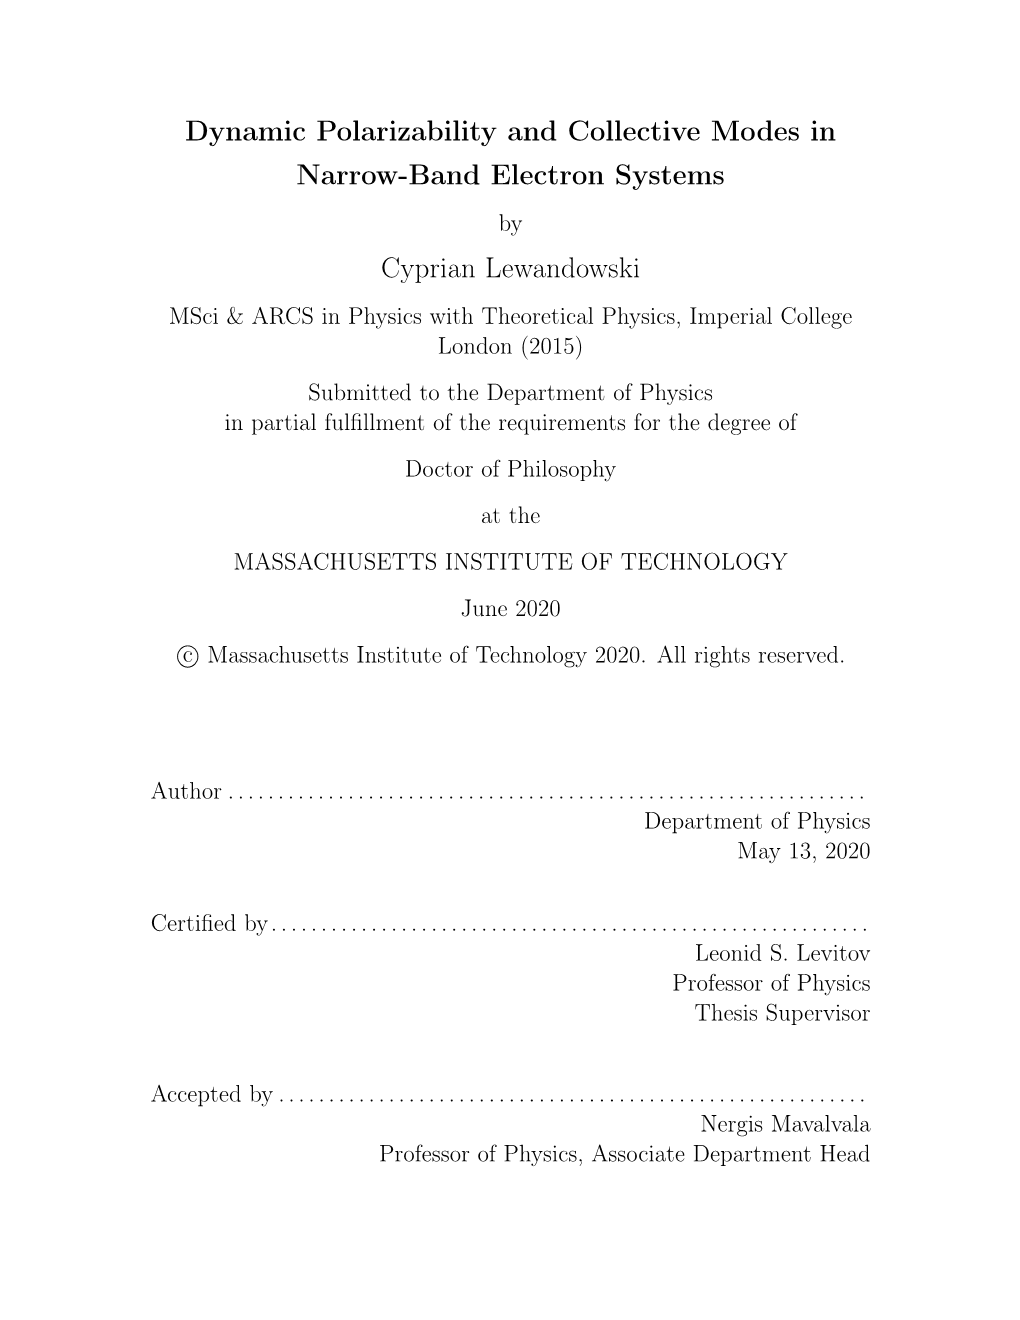 Dynamic Polarizability and Collective Modes in Narrow-Band Electron Systems Cyprian Lewandowski